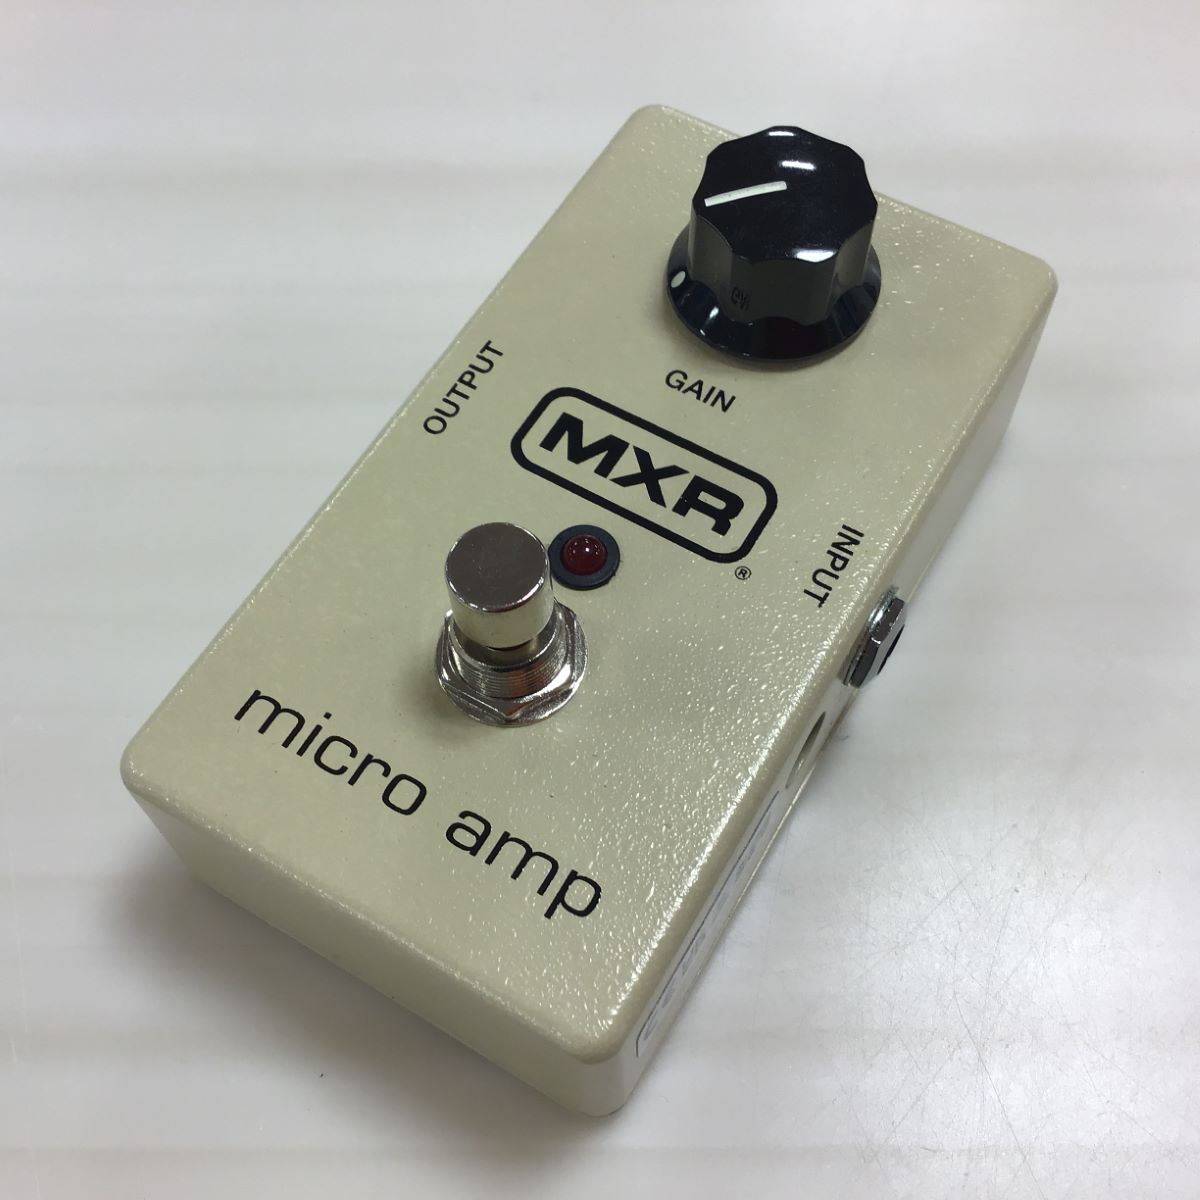 MXR M133 Micro Amp コンパクトエフェクター【ブースター】 エム 